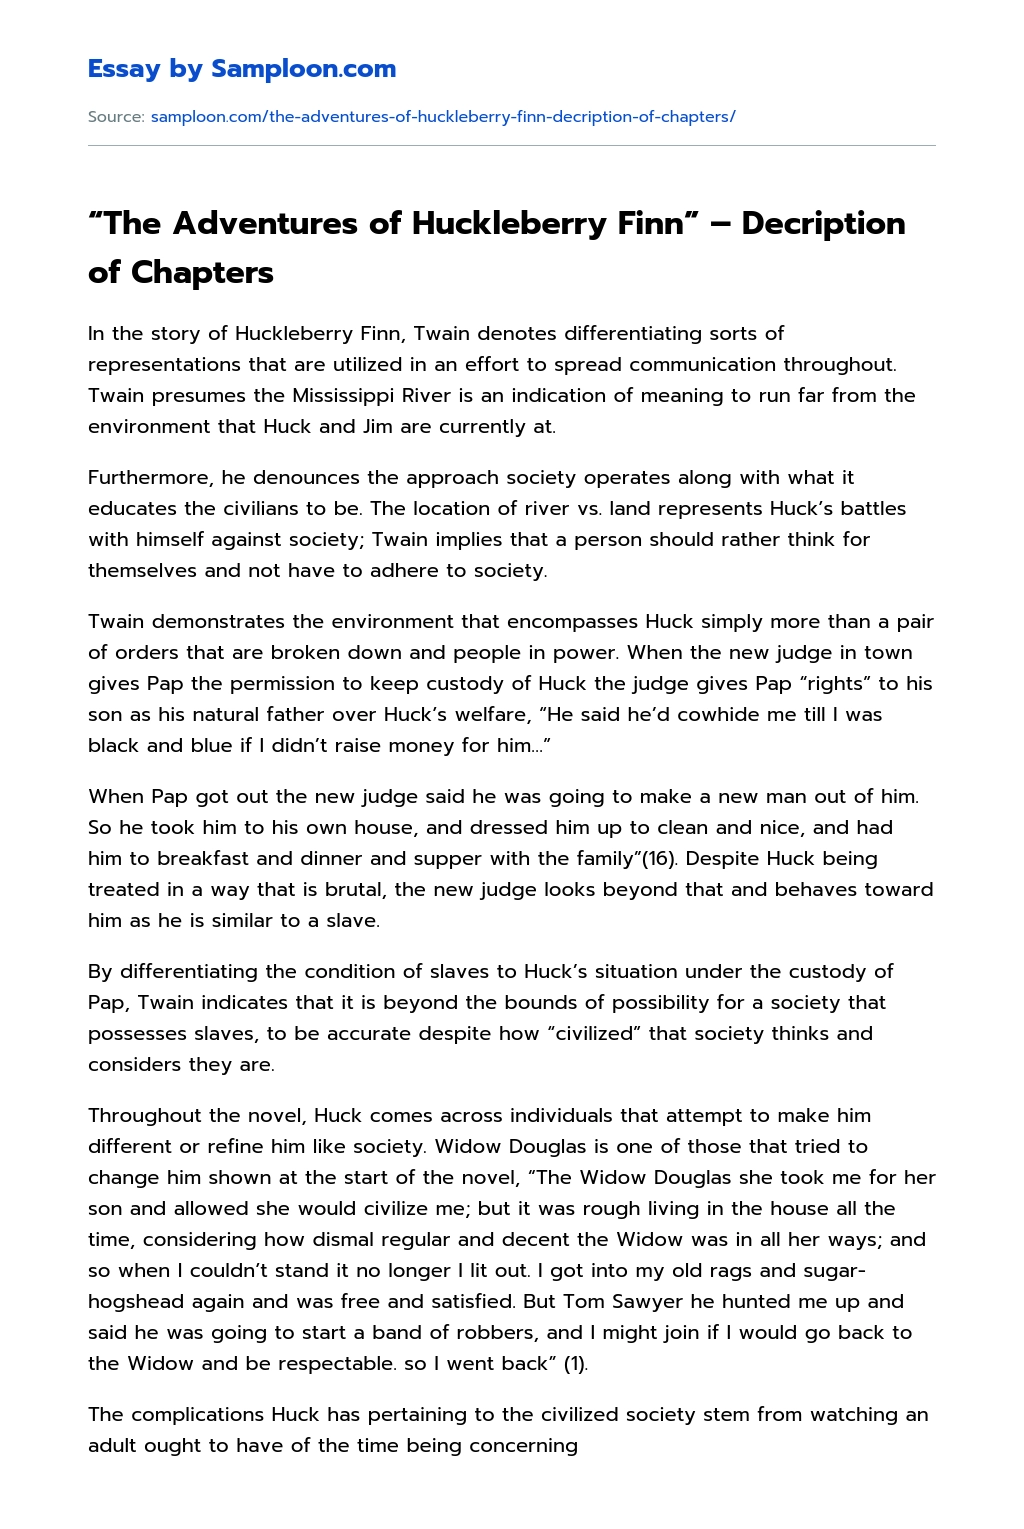 “The Adventures of Huckleberry Finn”. Decription of Chapters essay